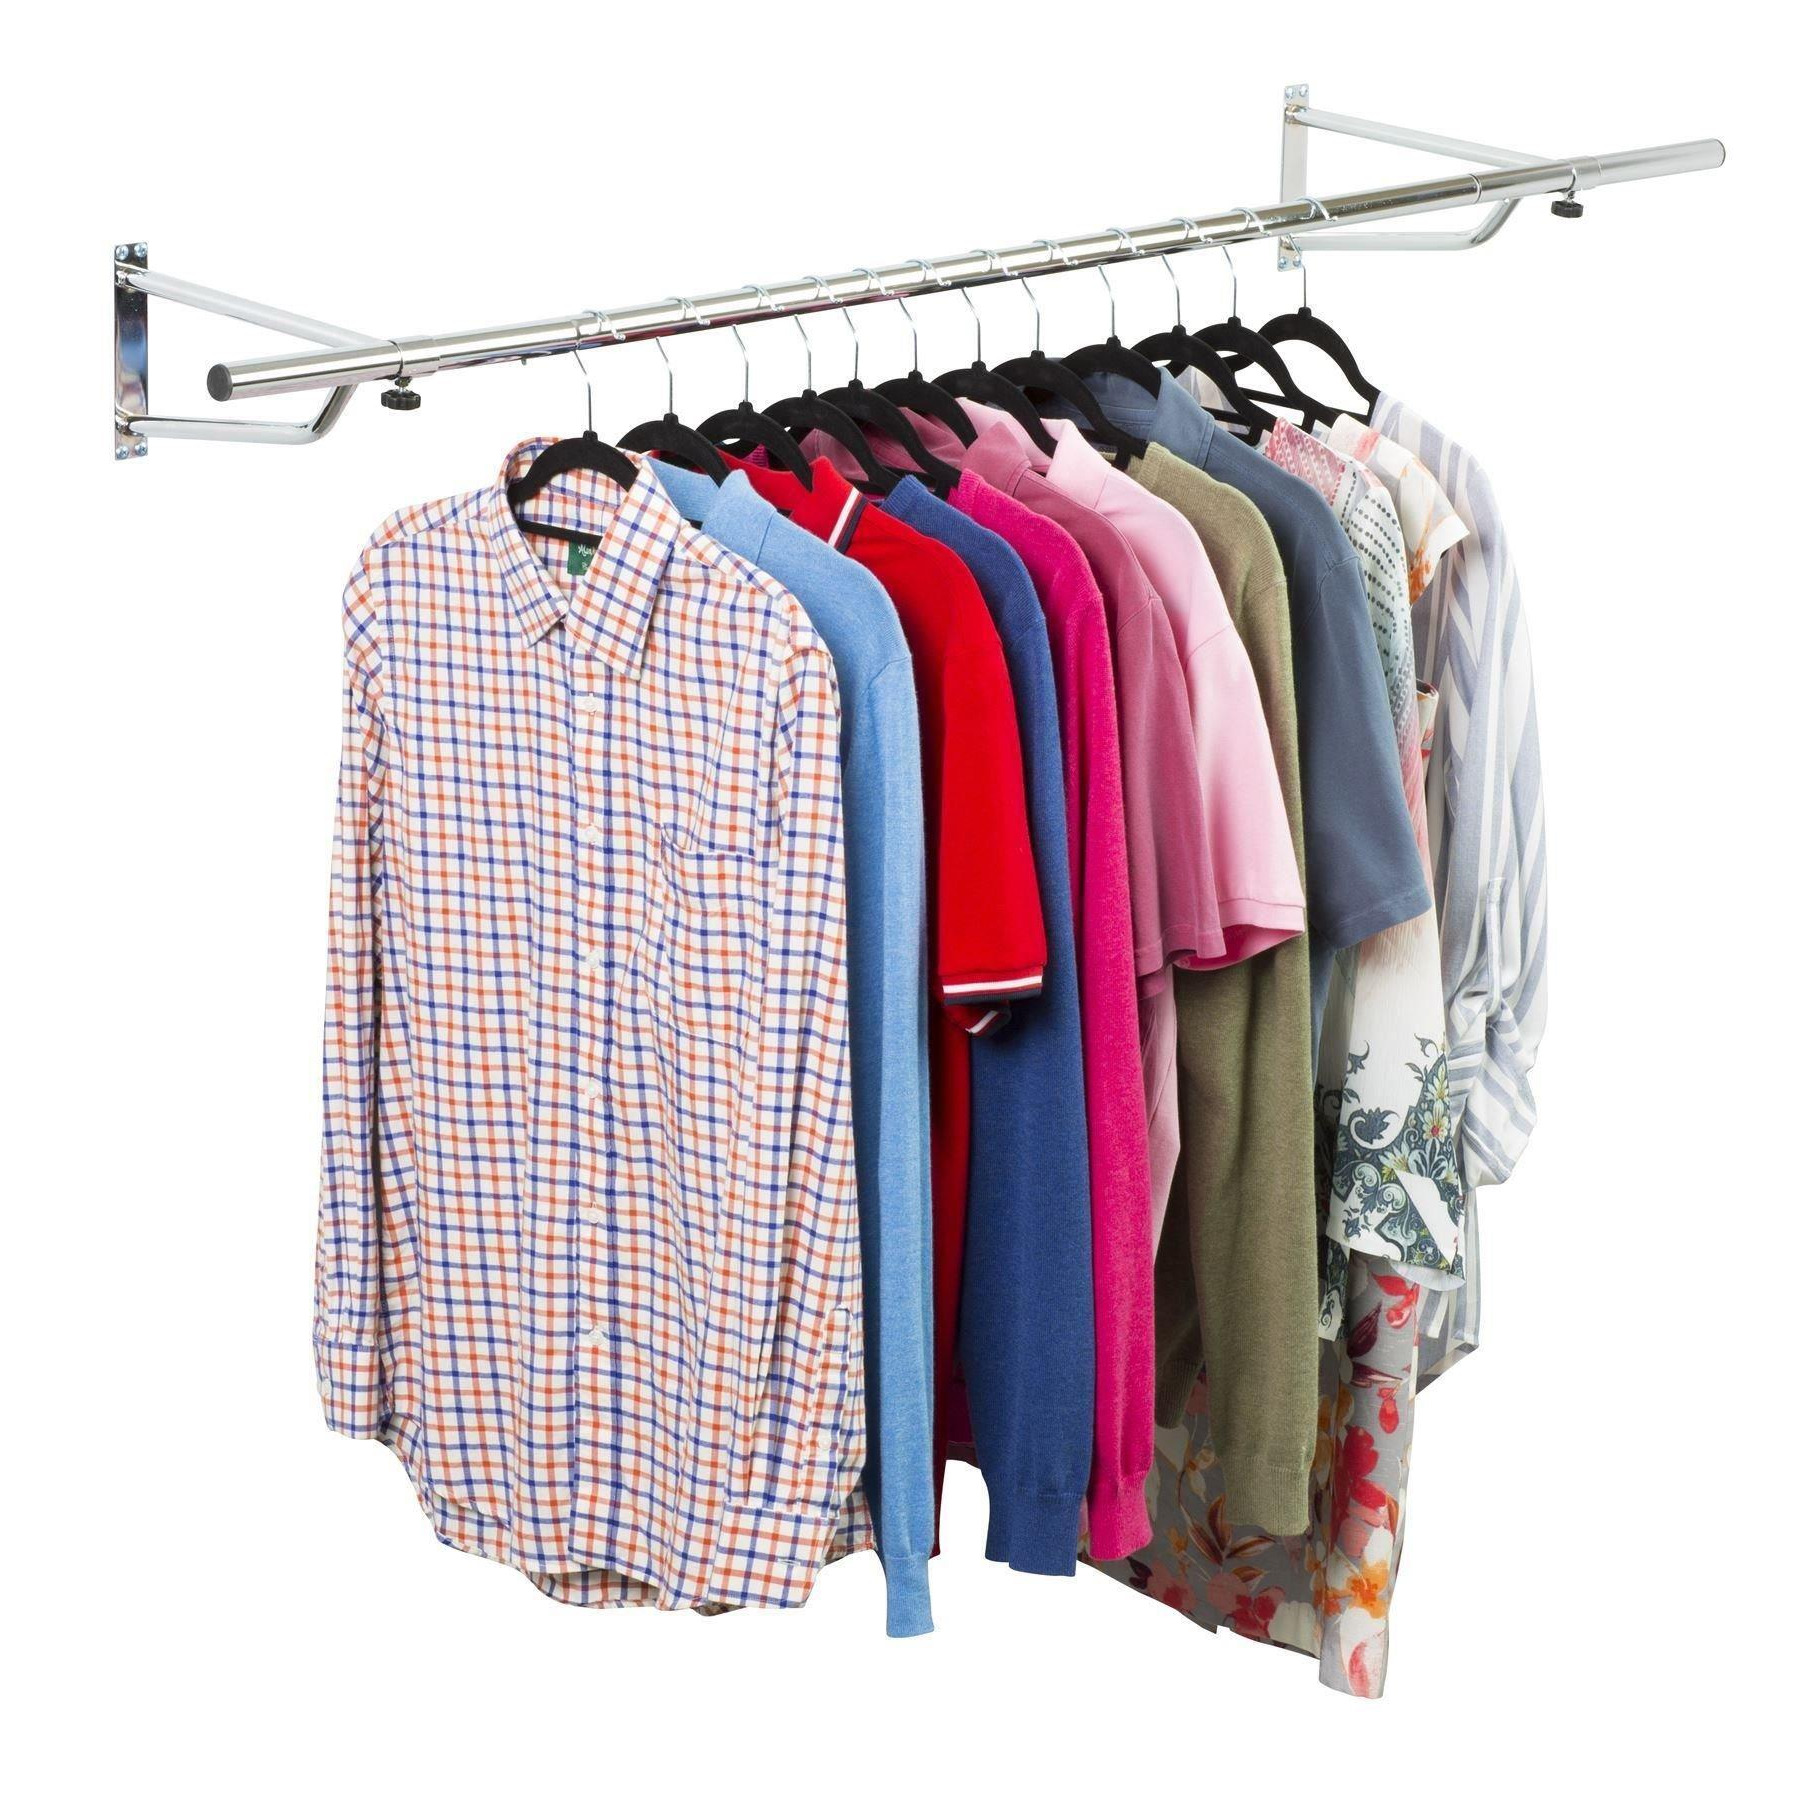 Clothes Rail Wall Mounted Garment Hanging Wardrobe Rack Storage 6ft Length - image 1